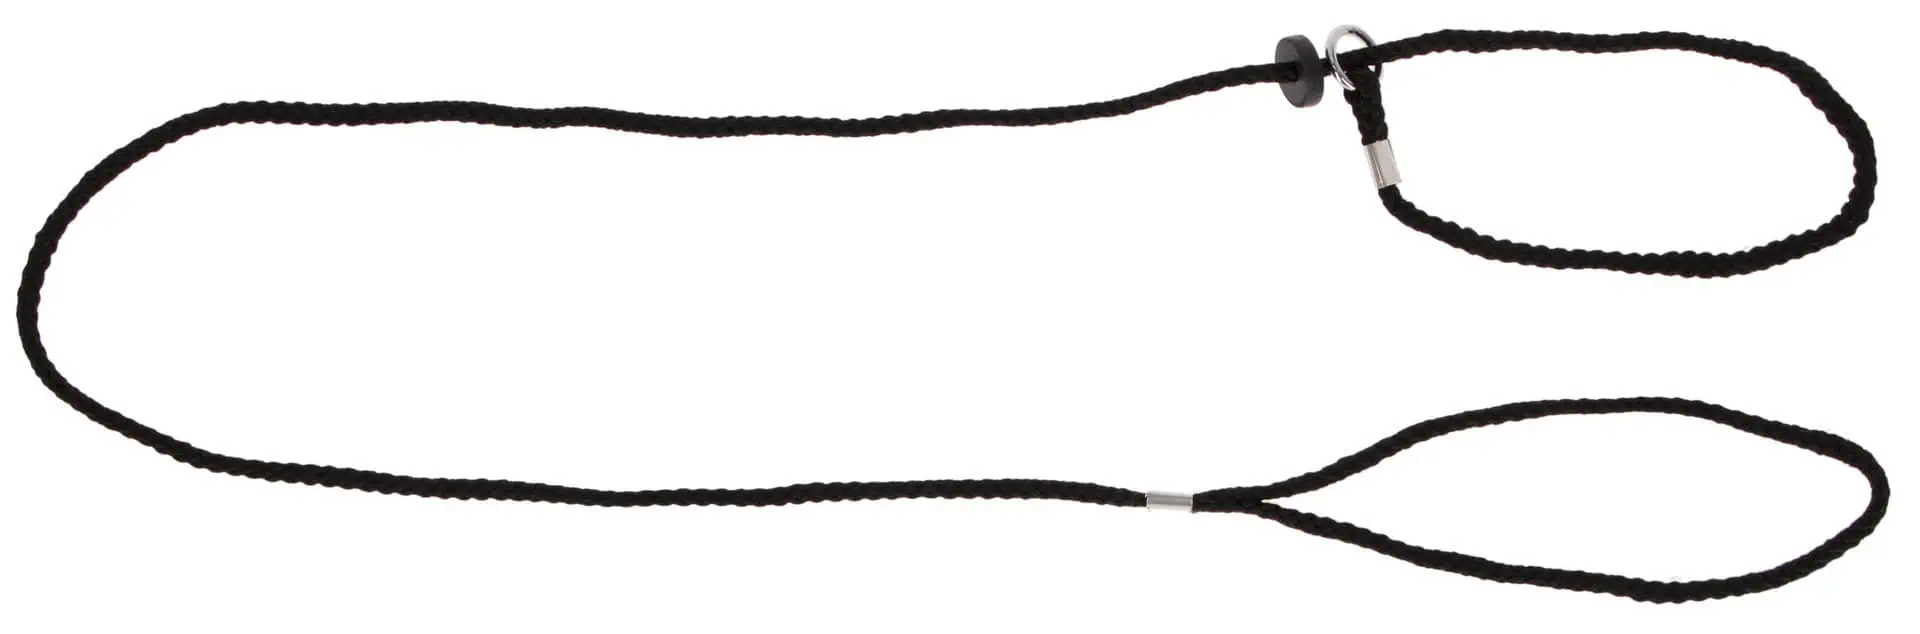 Show Leash black, Nylon with collar, 6 mm x 125 cm